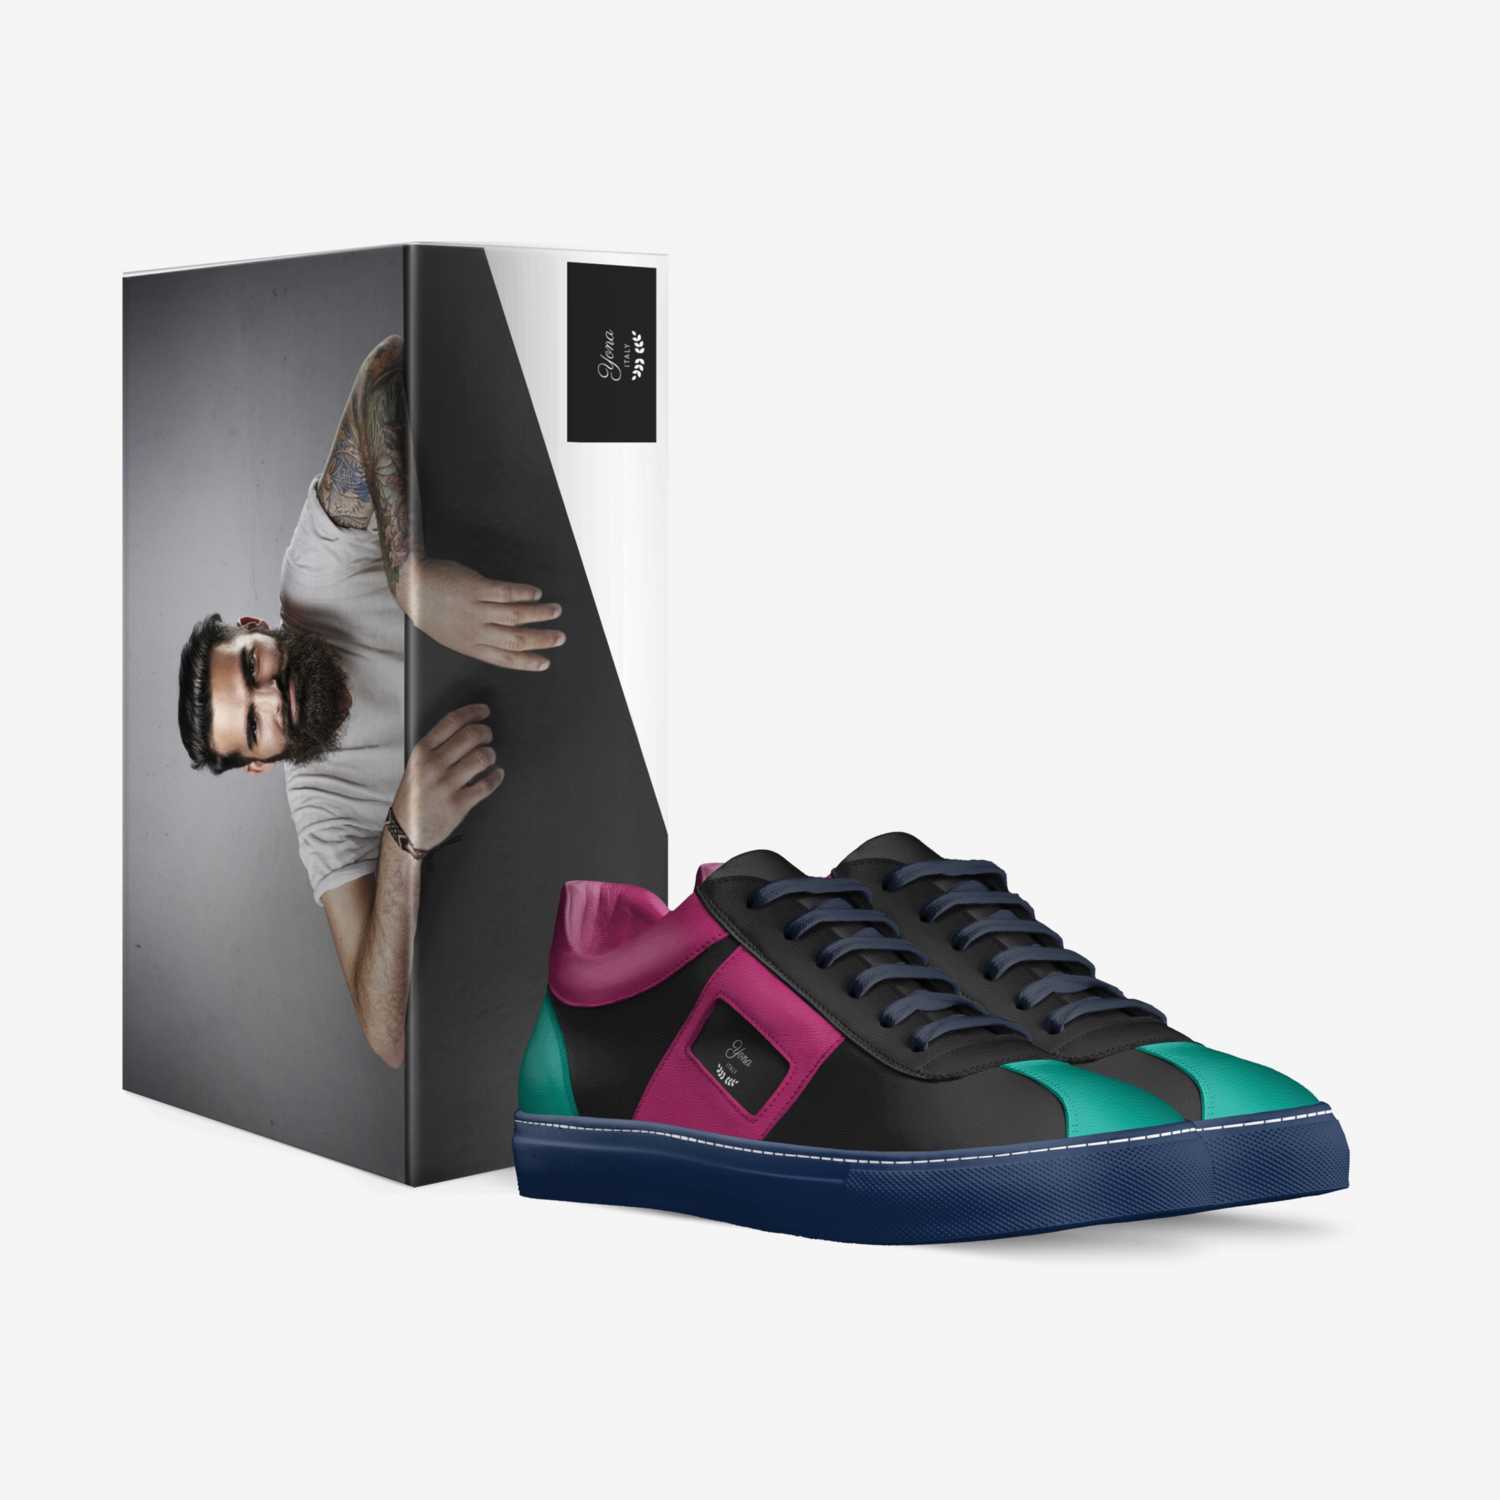 Yona custom made in Italy shoes by Salman Tahamtan | Box view